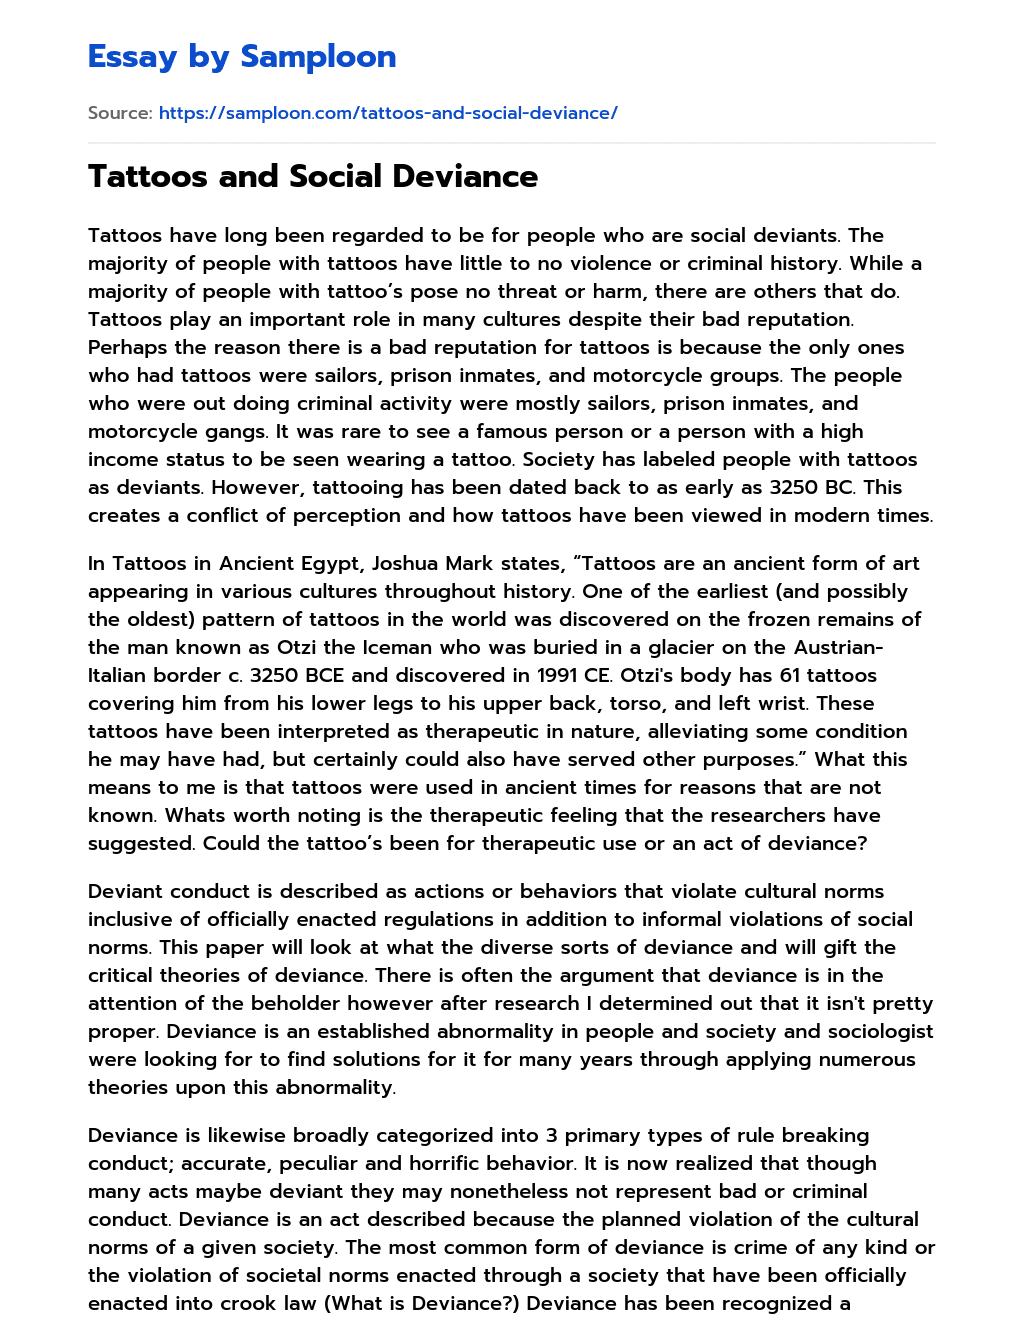 Tattoos and Social Deviance essay